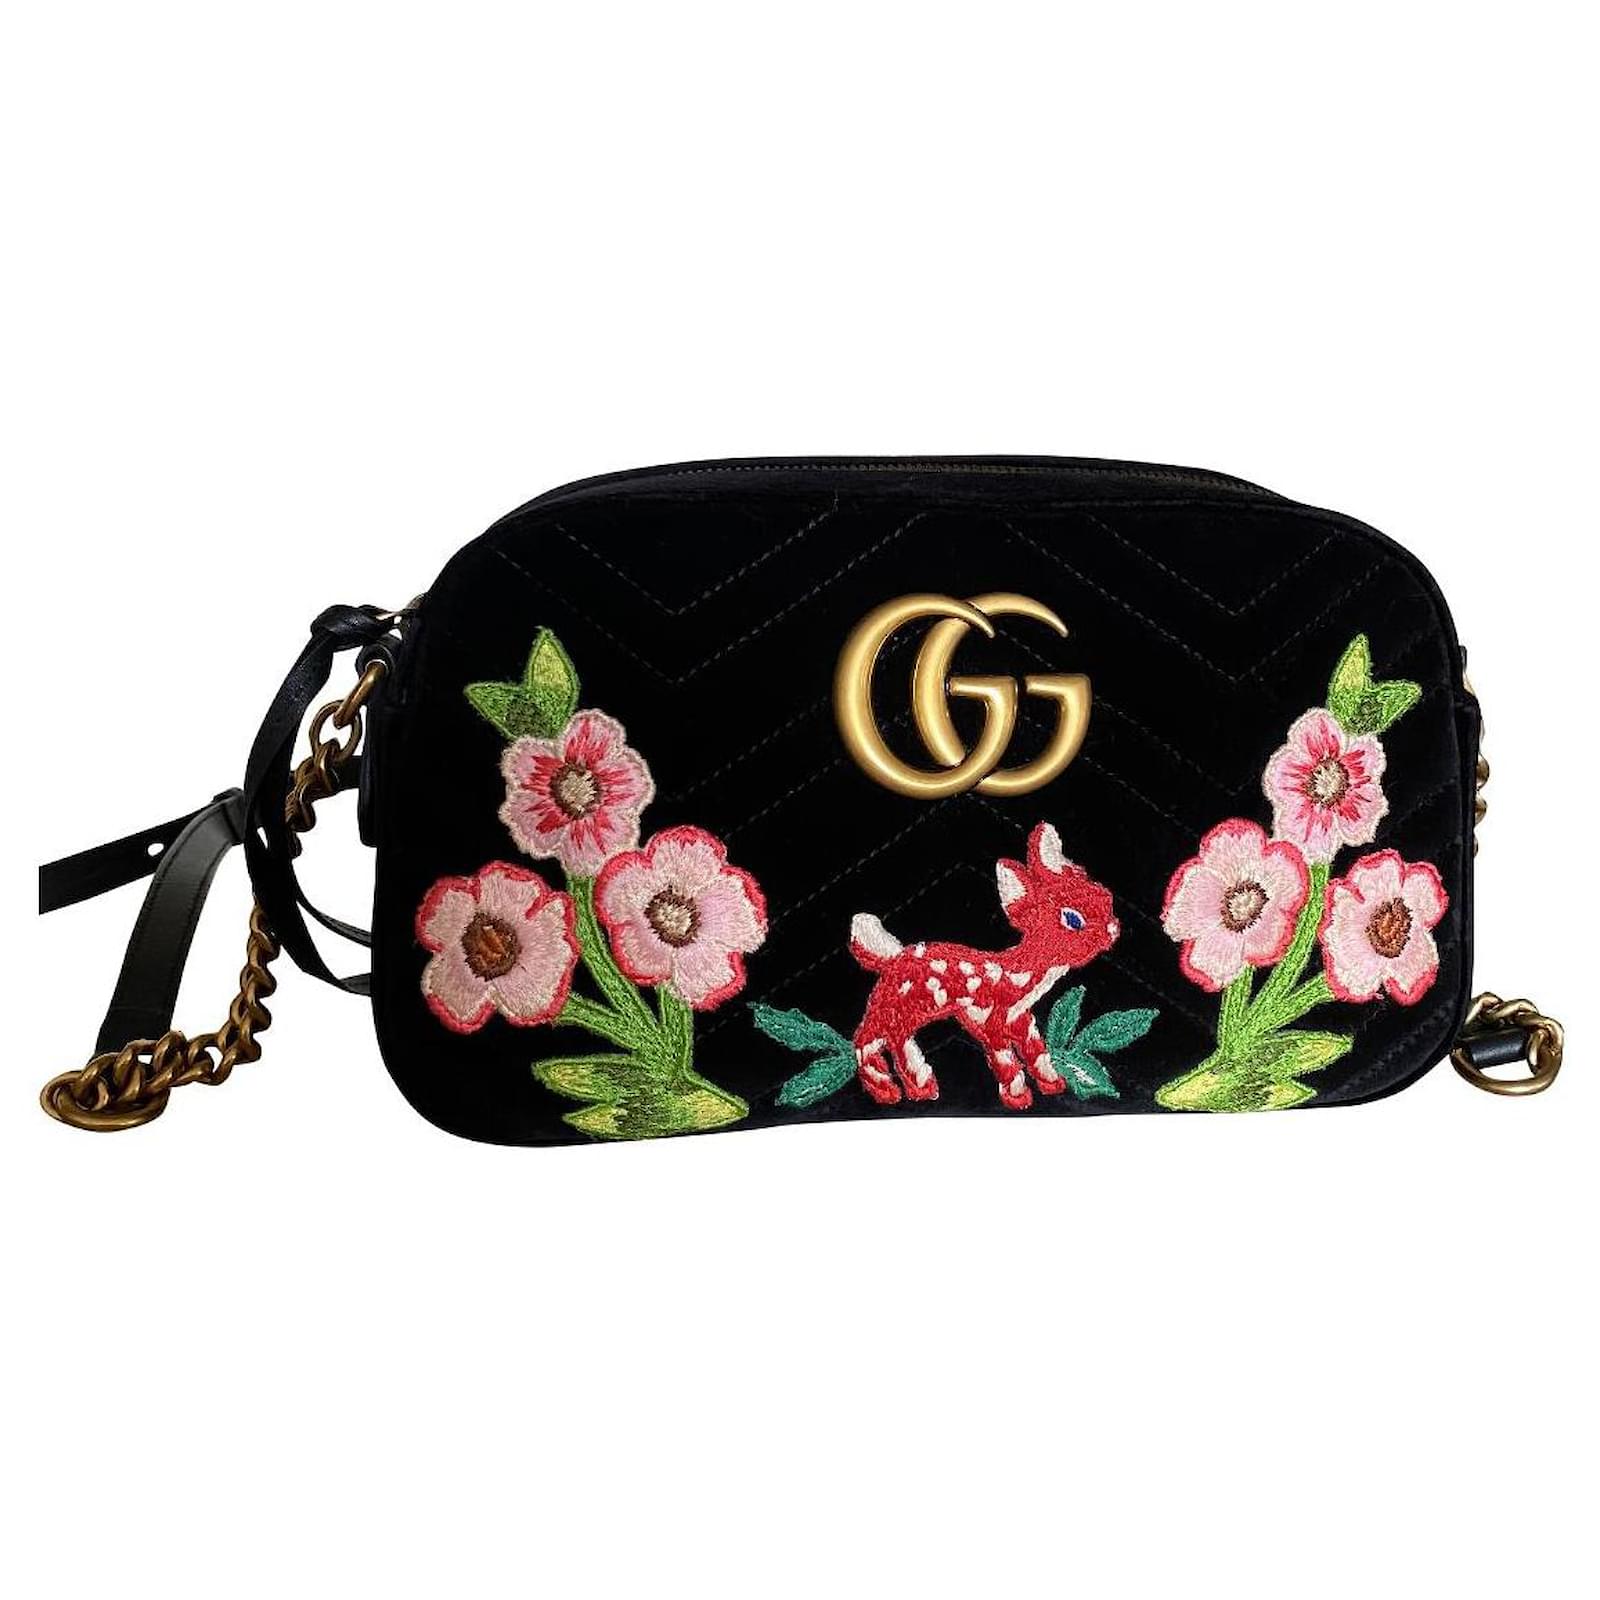 GUCCI BALENCIAGA GG Marmont Crossbody Bag Shoulder Floral Purse